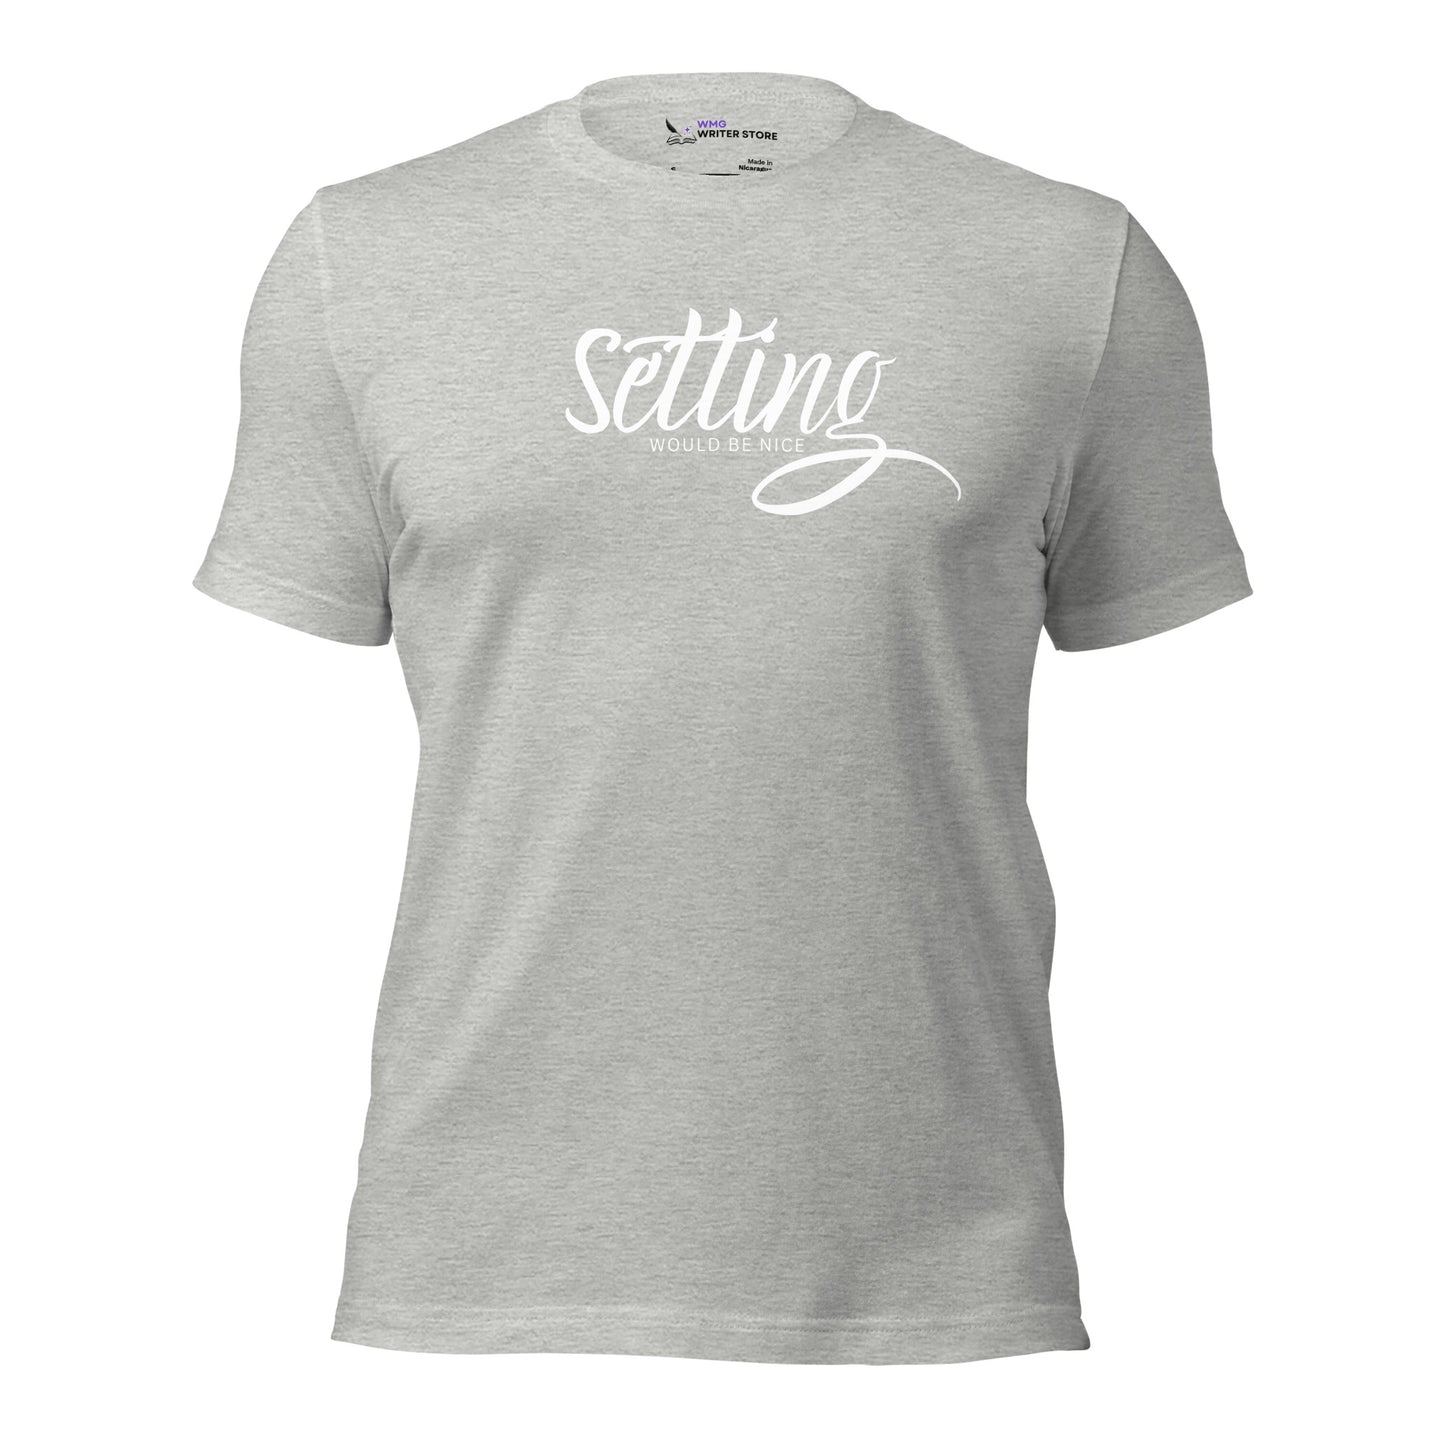 SETTING WOULD BE NICE Unisex t-shirt | WMG Writer Store